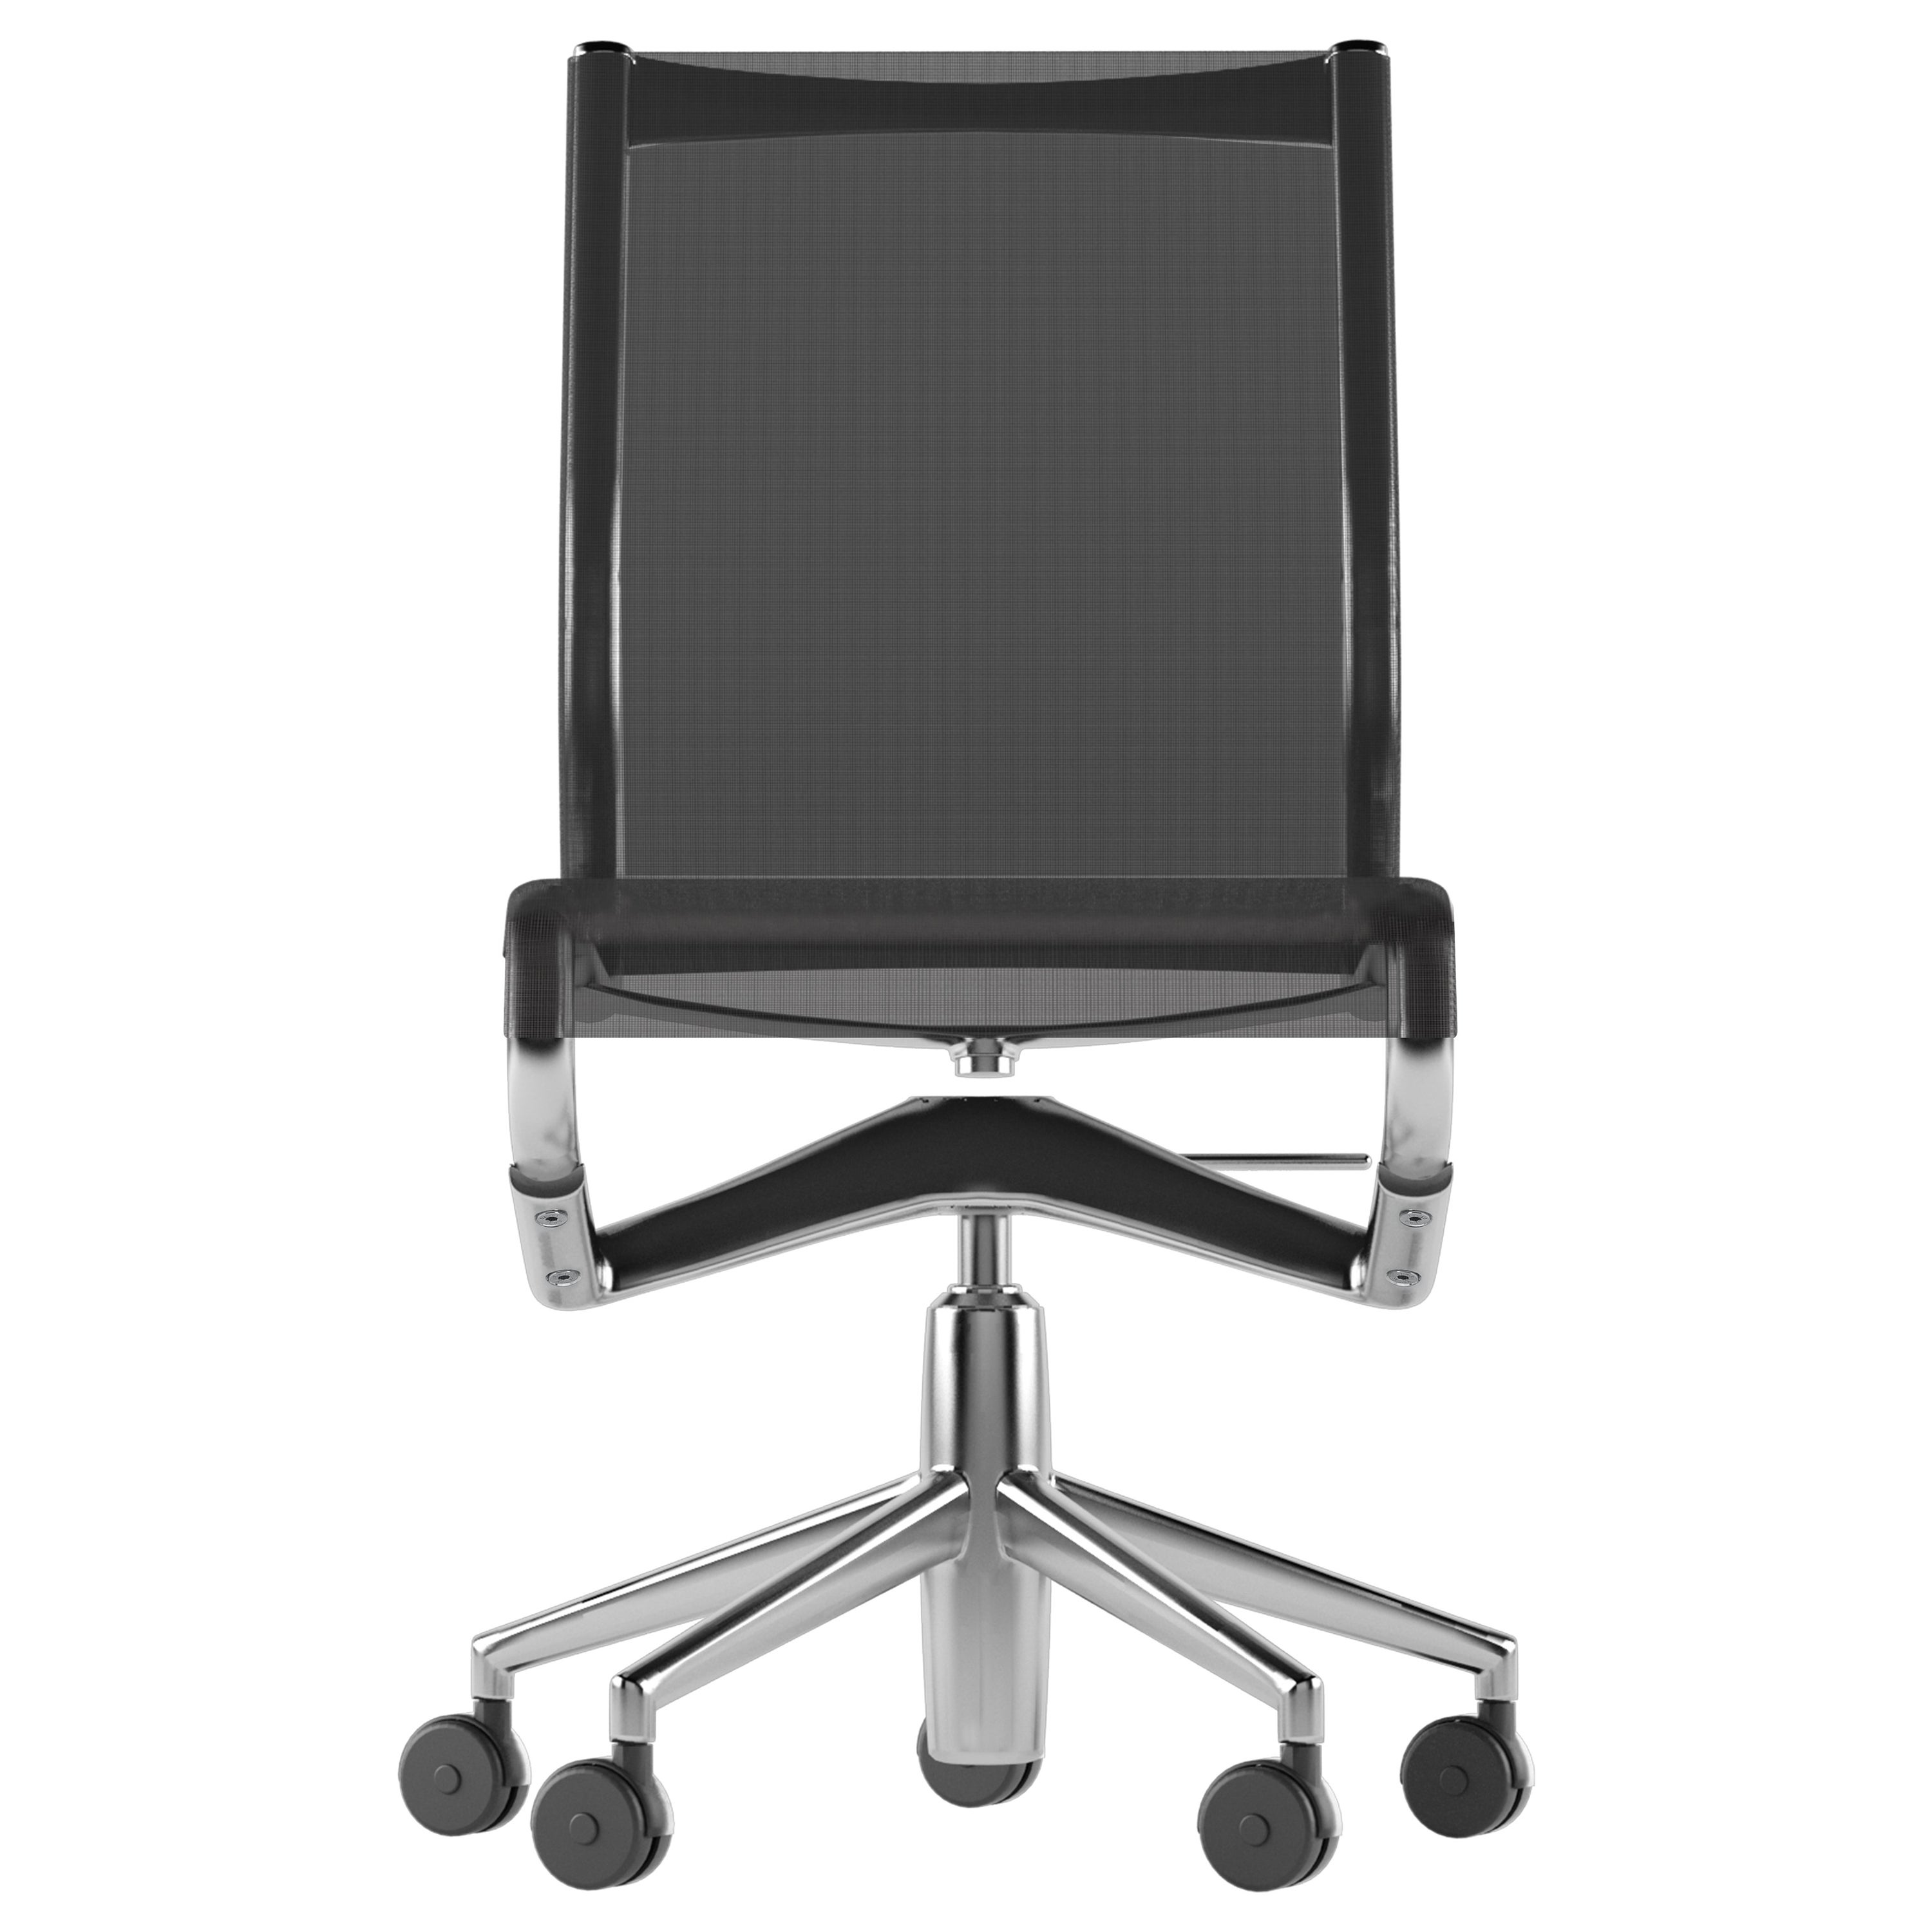 Alias 432 Rollingframe 44 Chair in Metallic Grey Mesh and Chromed Aluminum Frame